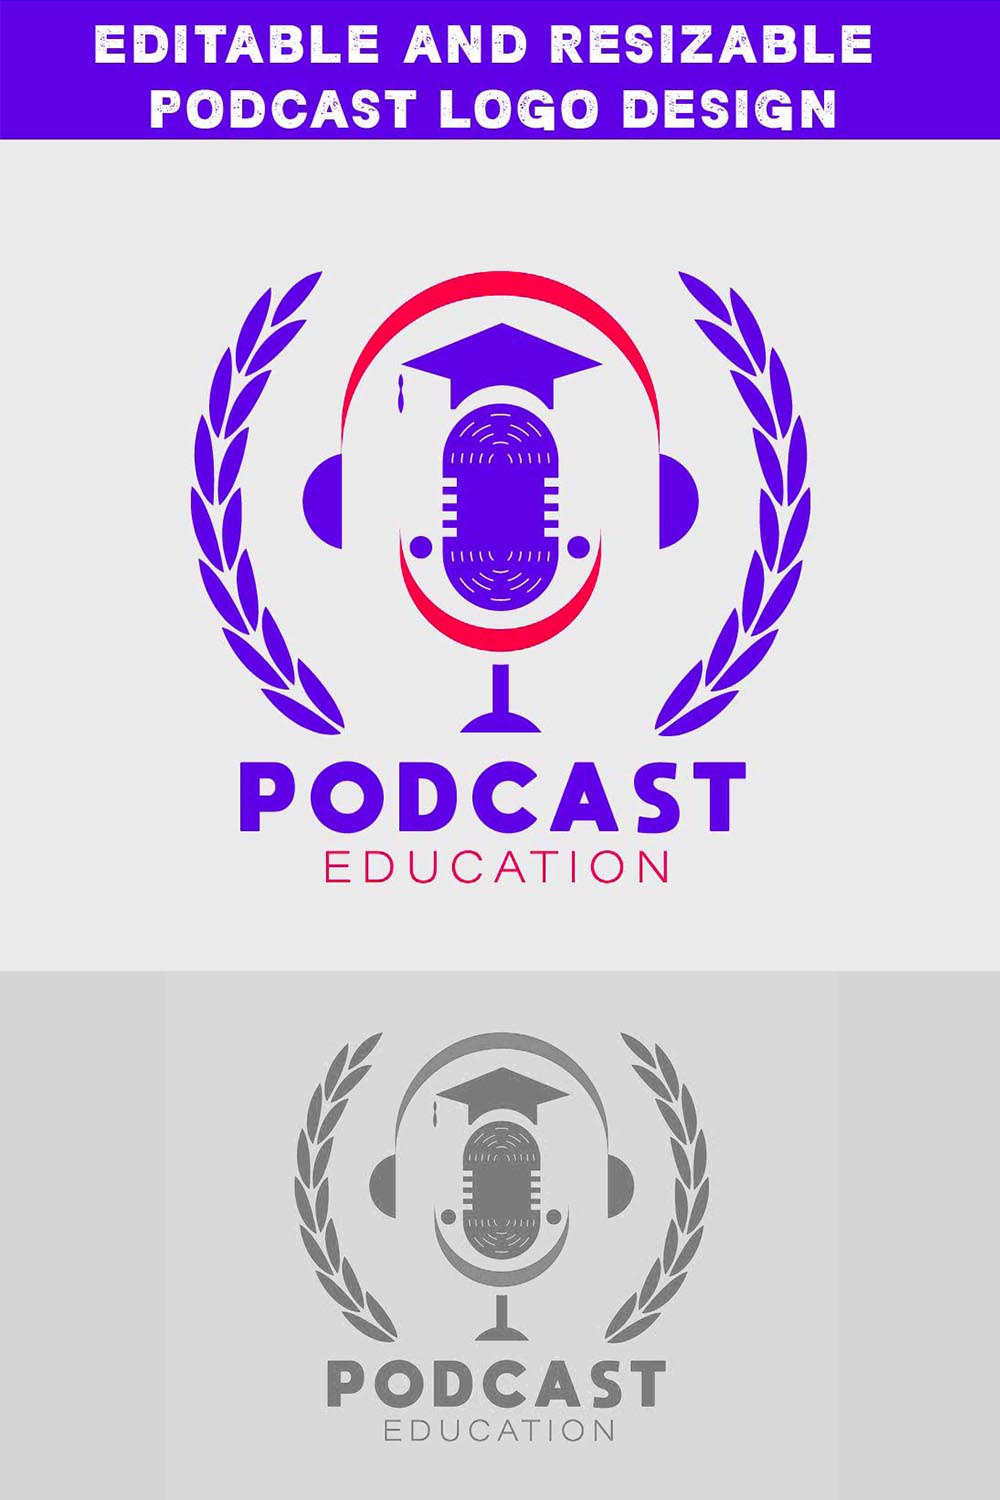 Editable and Resizable Podcast Logo Design Pinterest image.